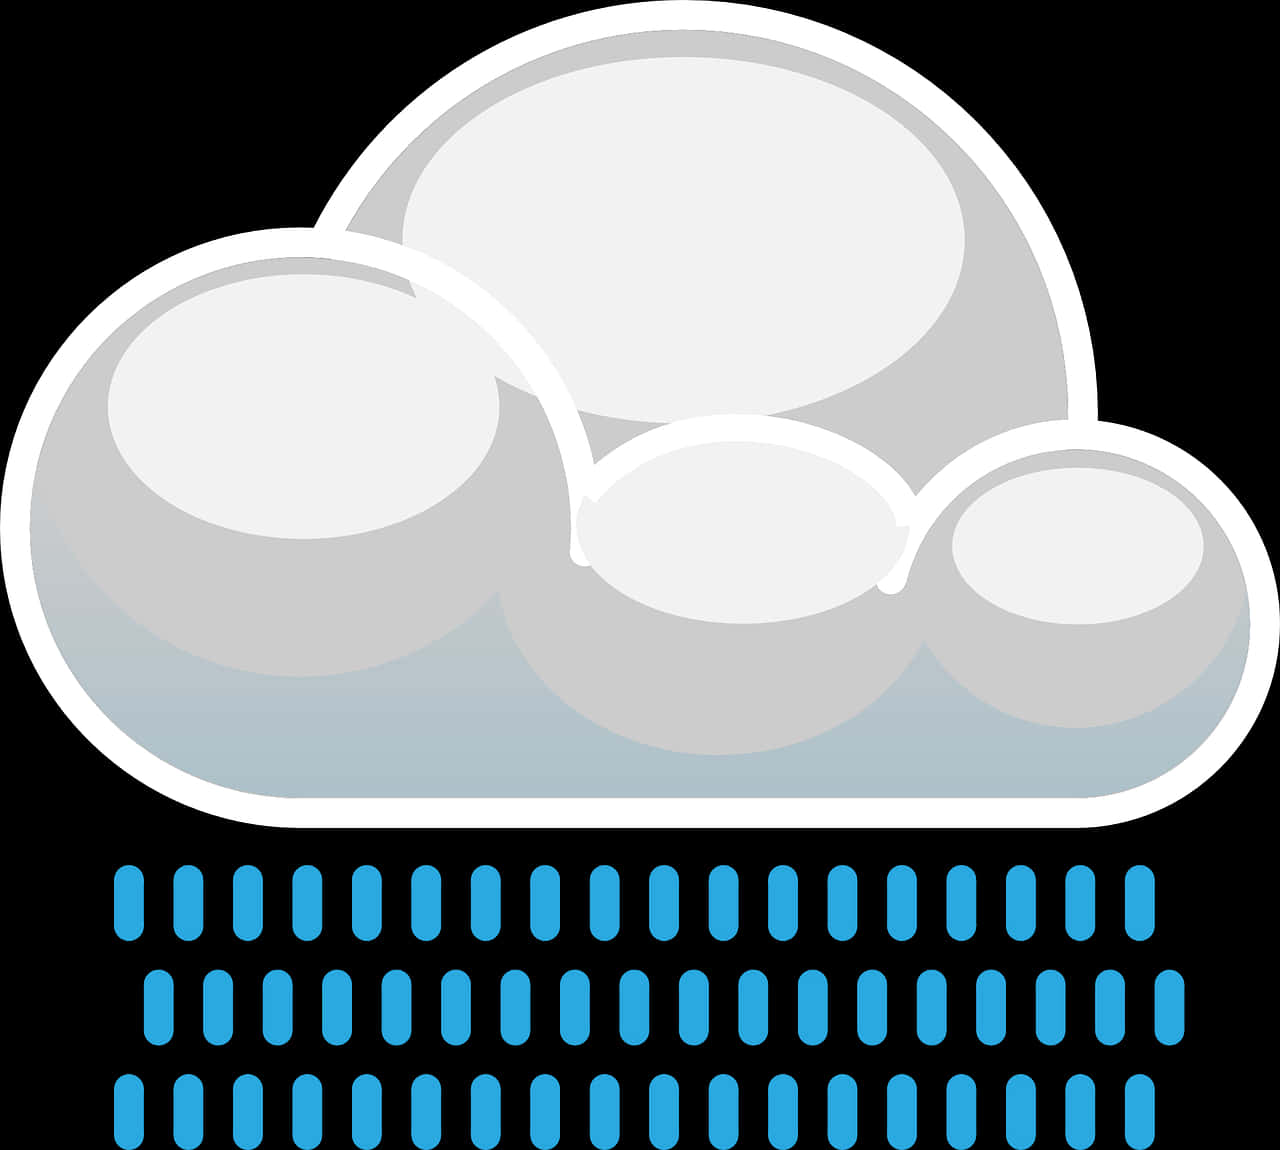 Stylized Rain Cloud Graphic PNG image